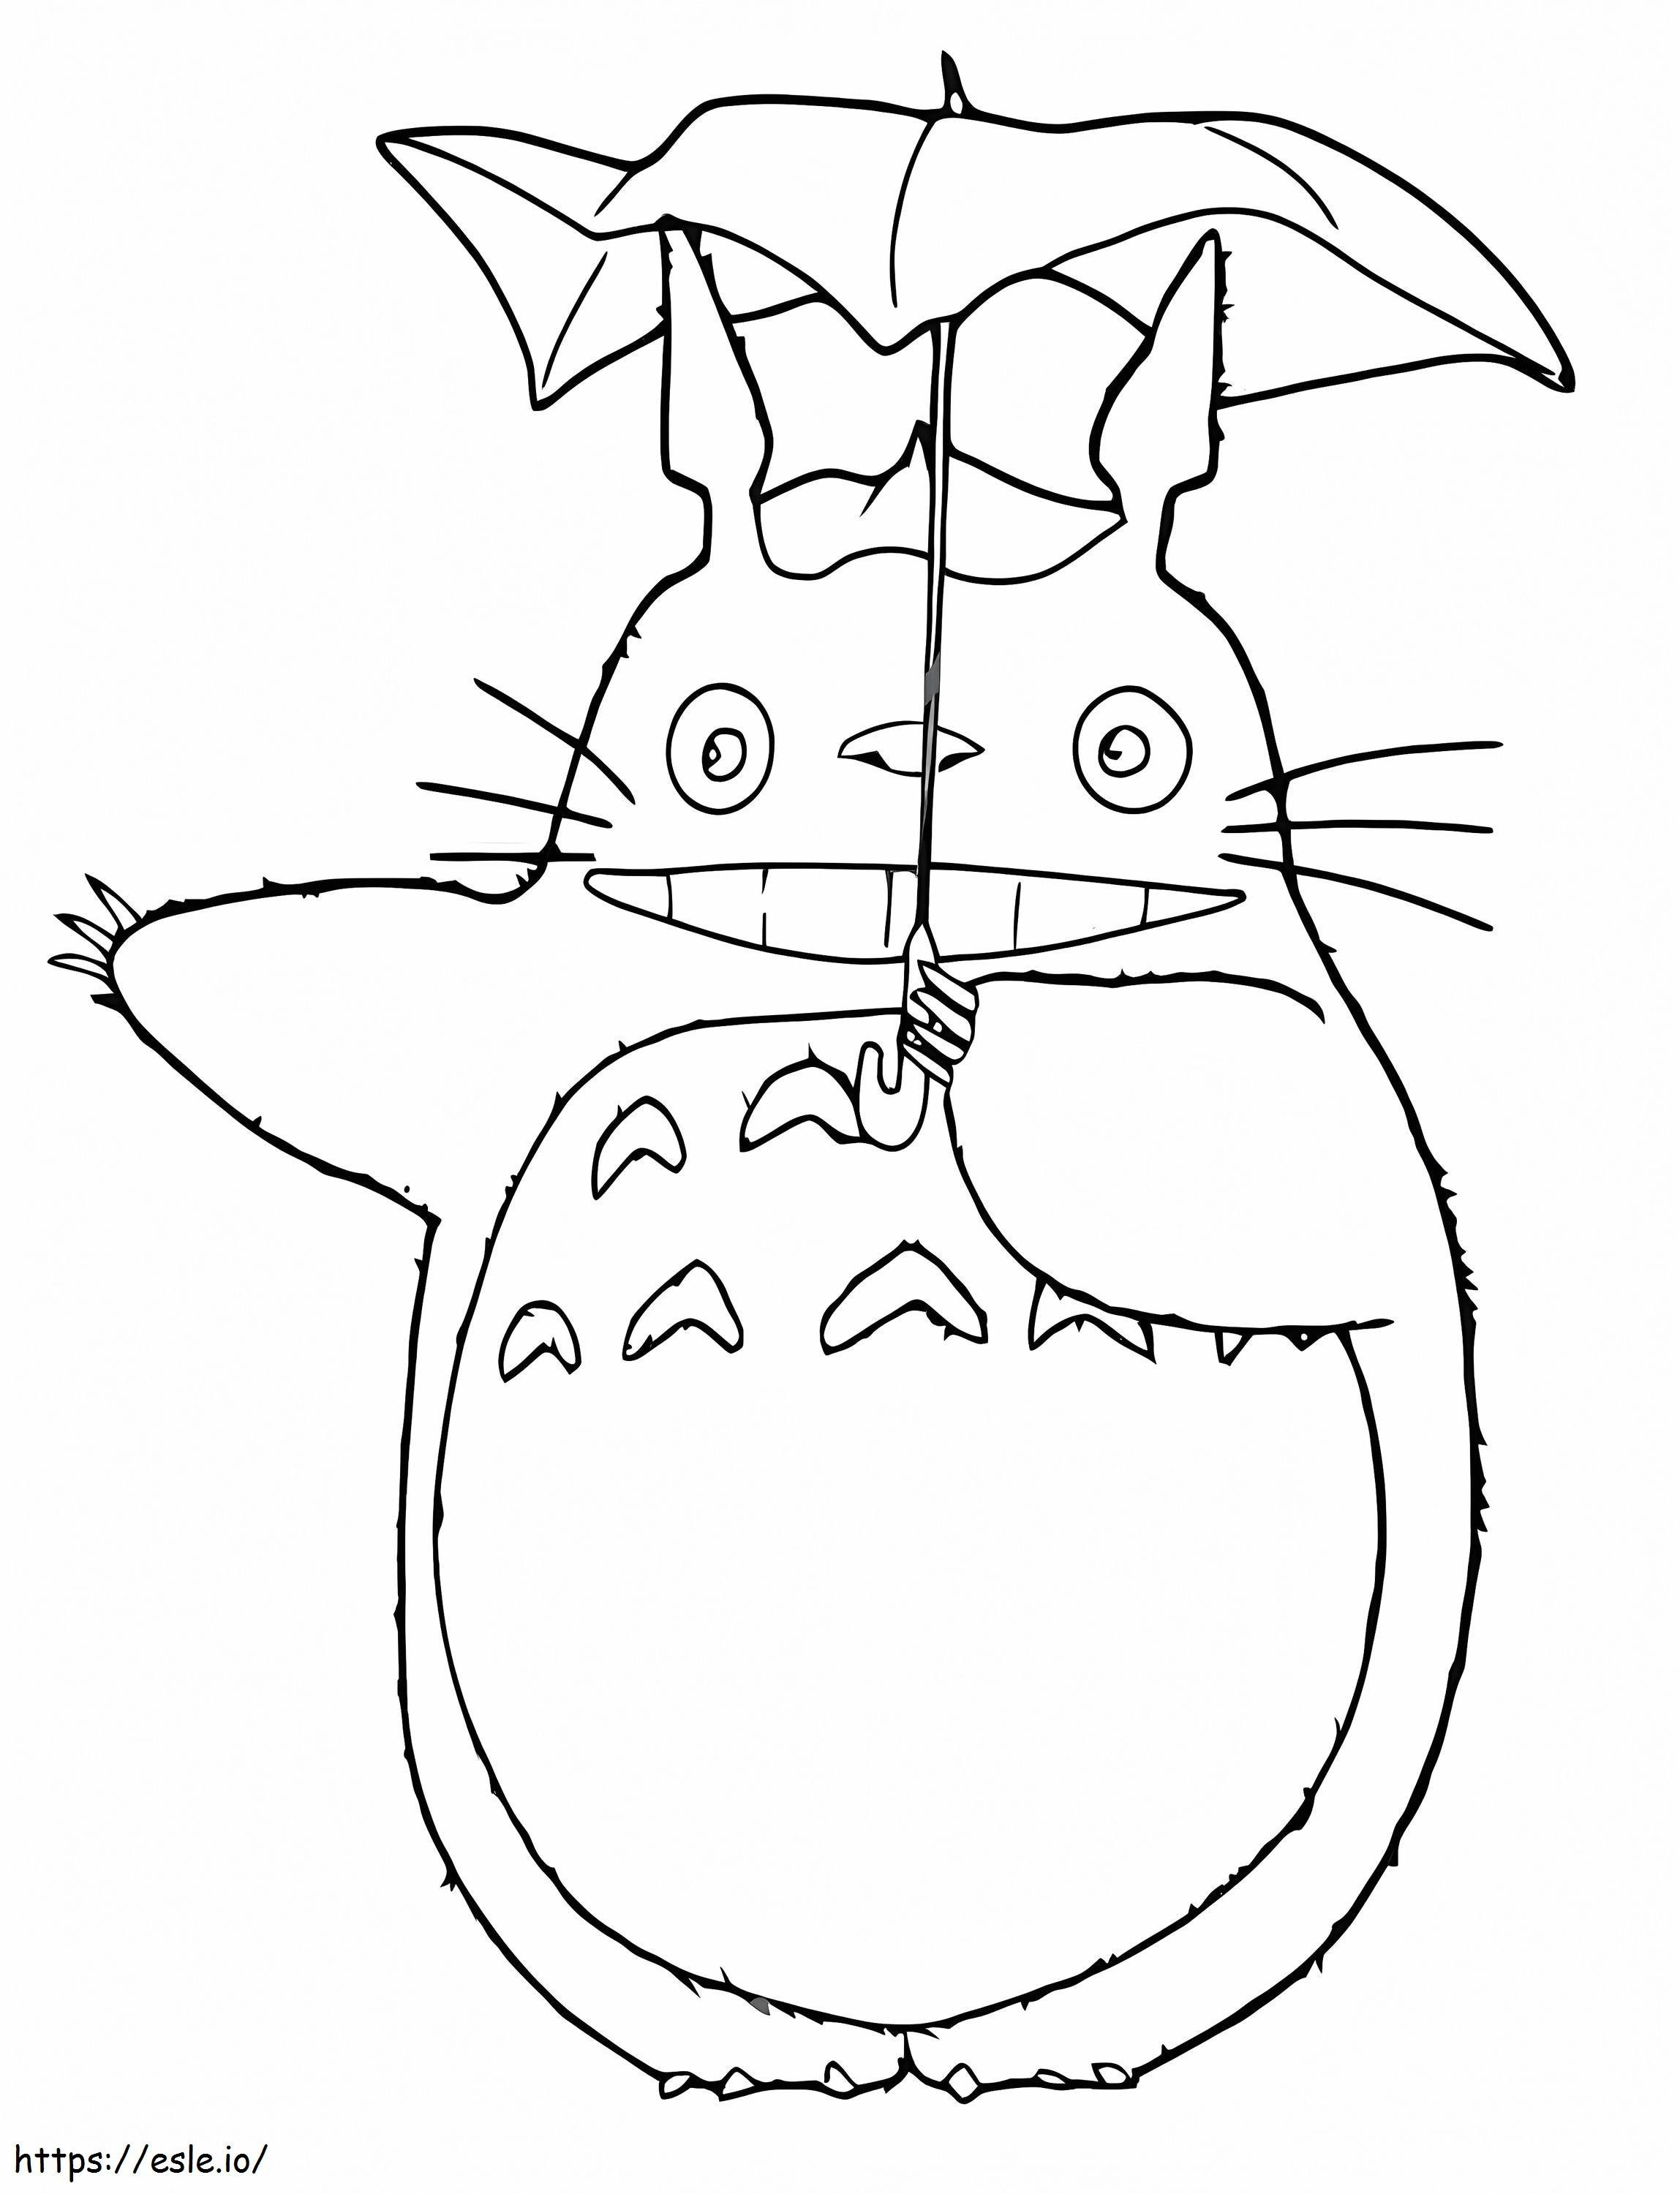 Coloriage Magnifique Totoro 2 à imprimer dessin